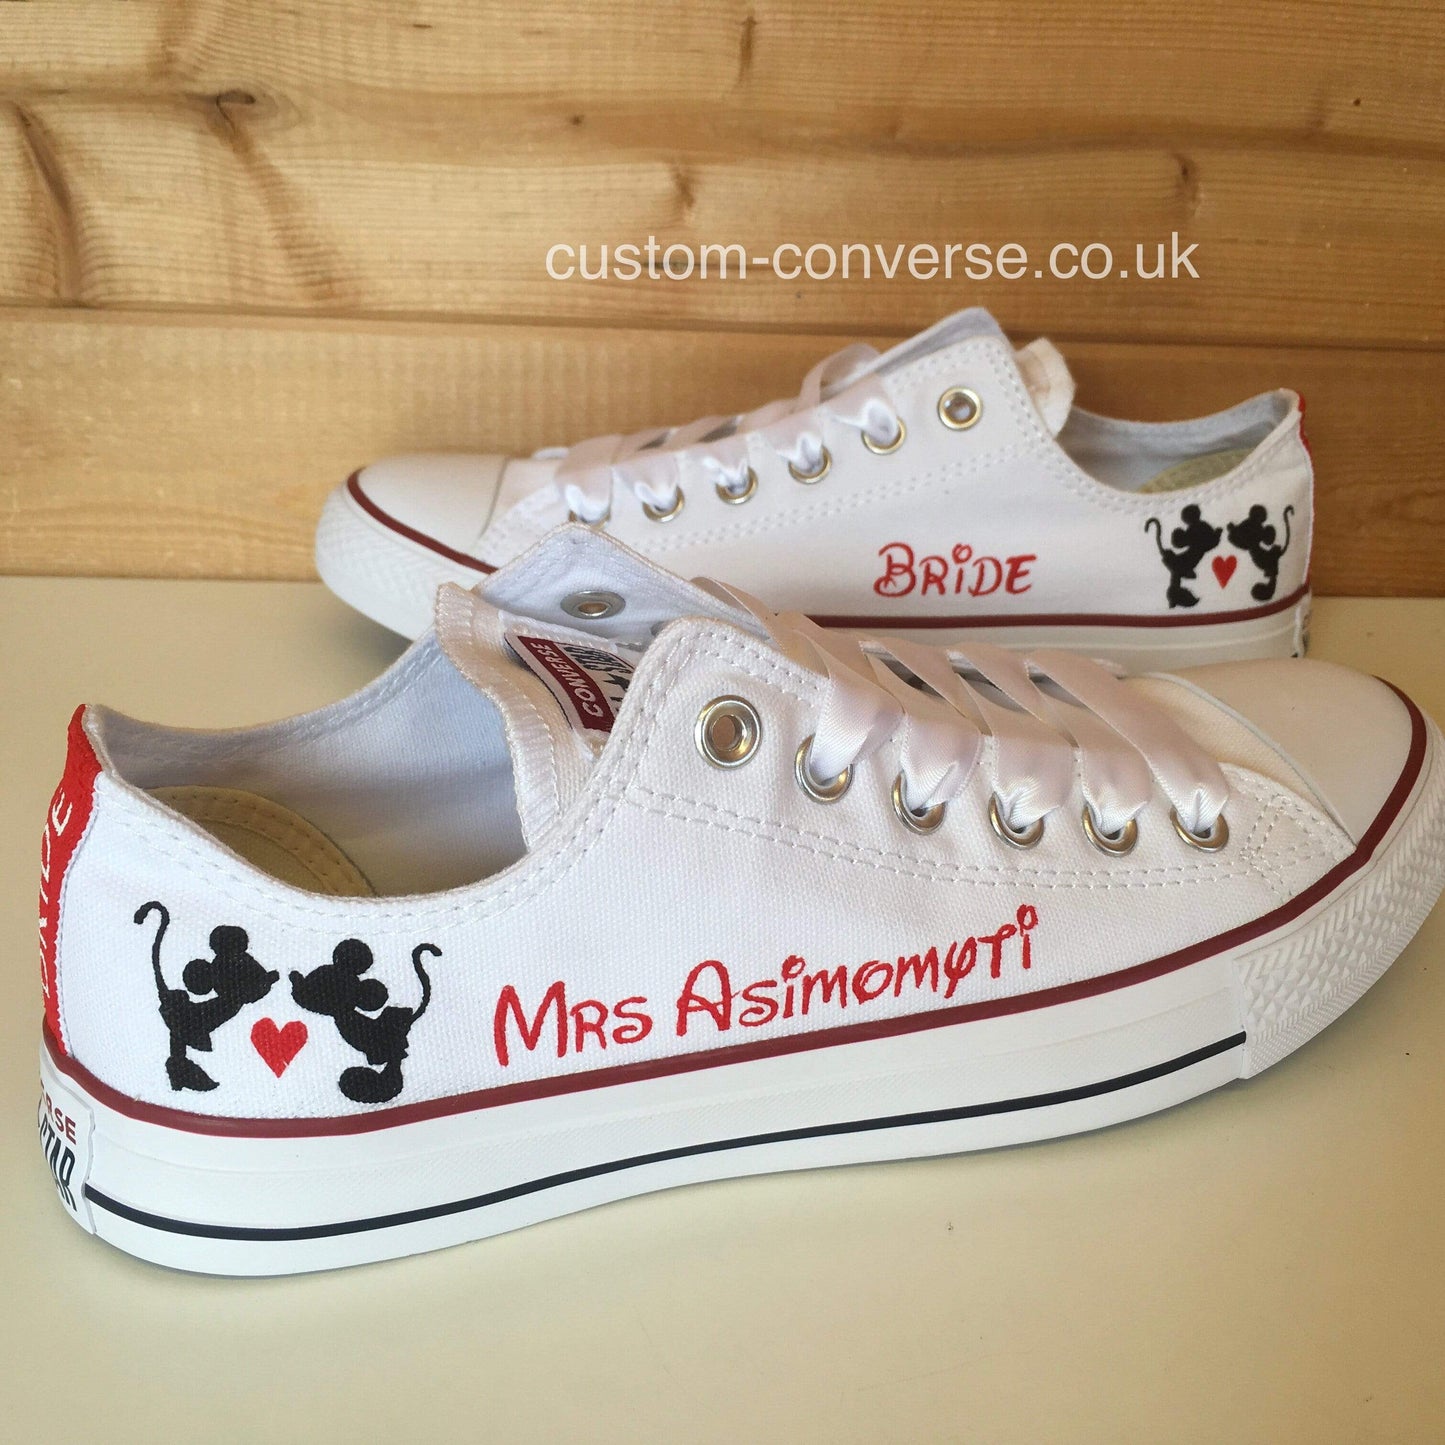 Minnie Heart Mickey Silhouette - Custom Converse Ltd.